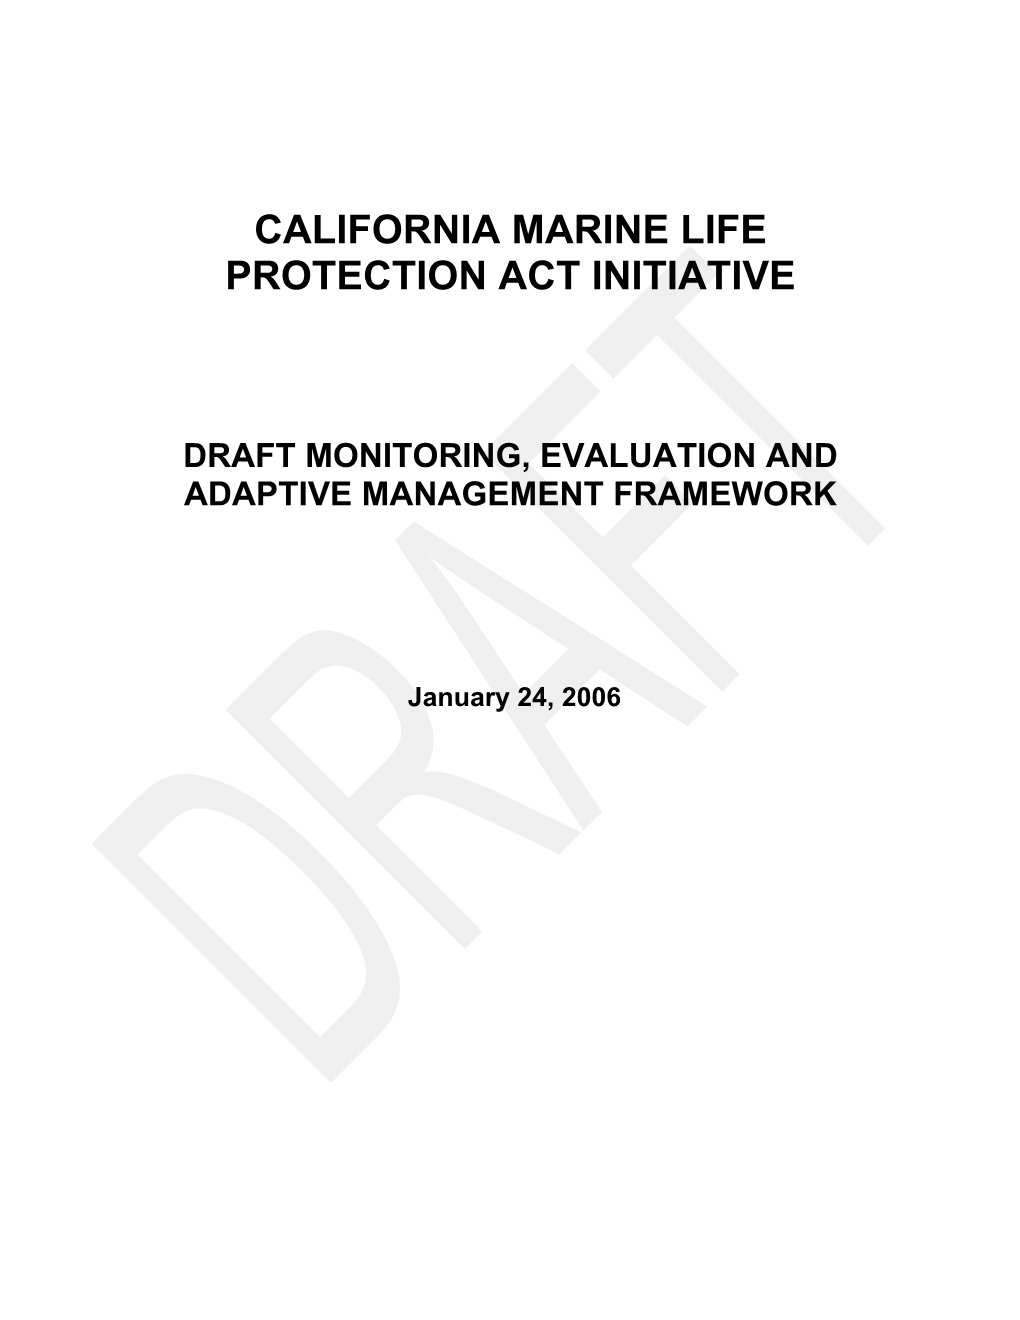 Title- Monitoring, Evaluation and Adaptive Management Framework